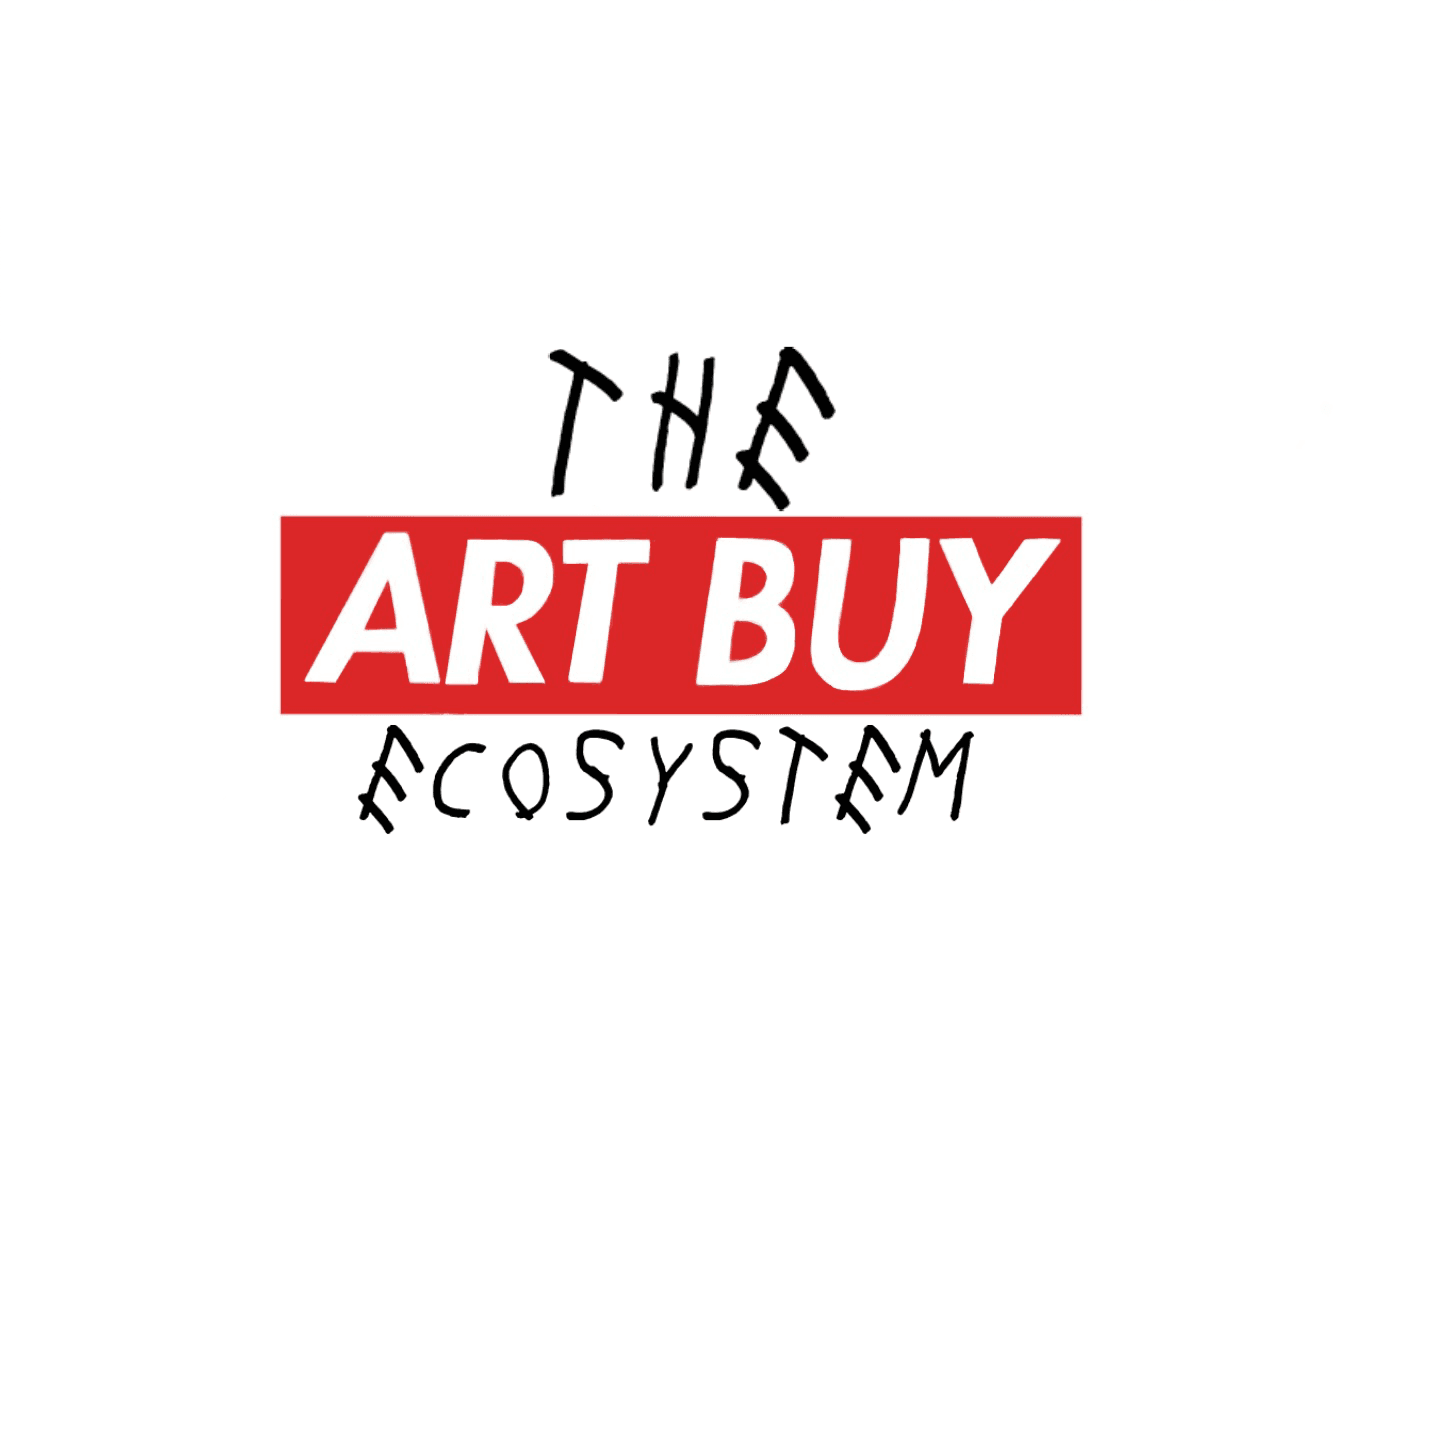 The_ART_BUY_Ecosystem